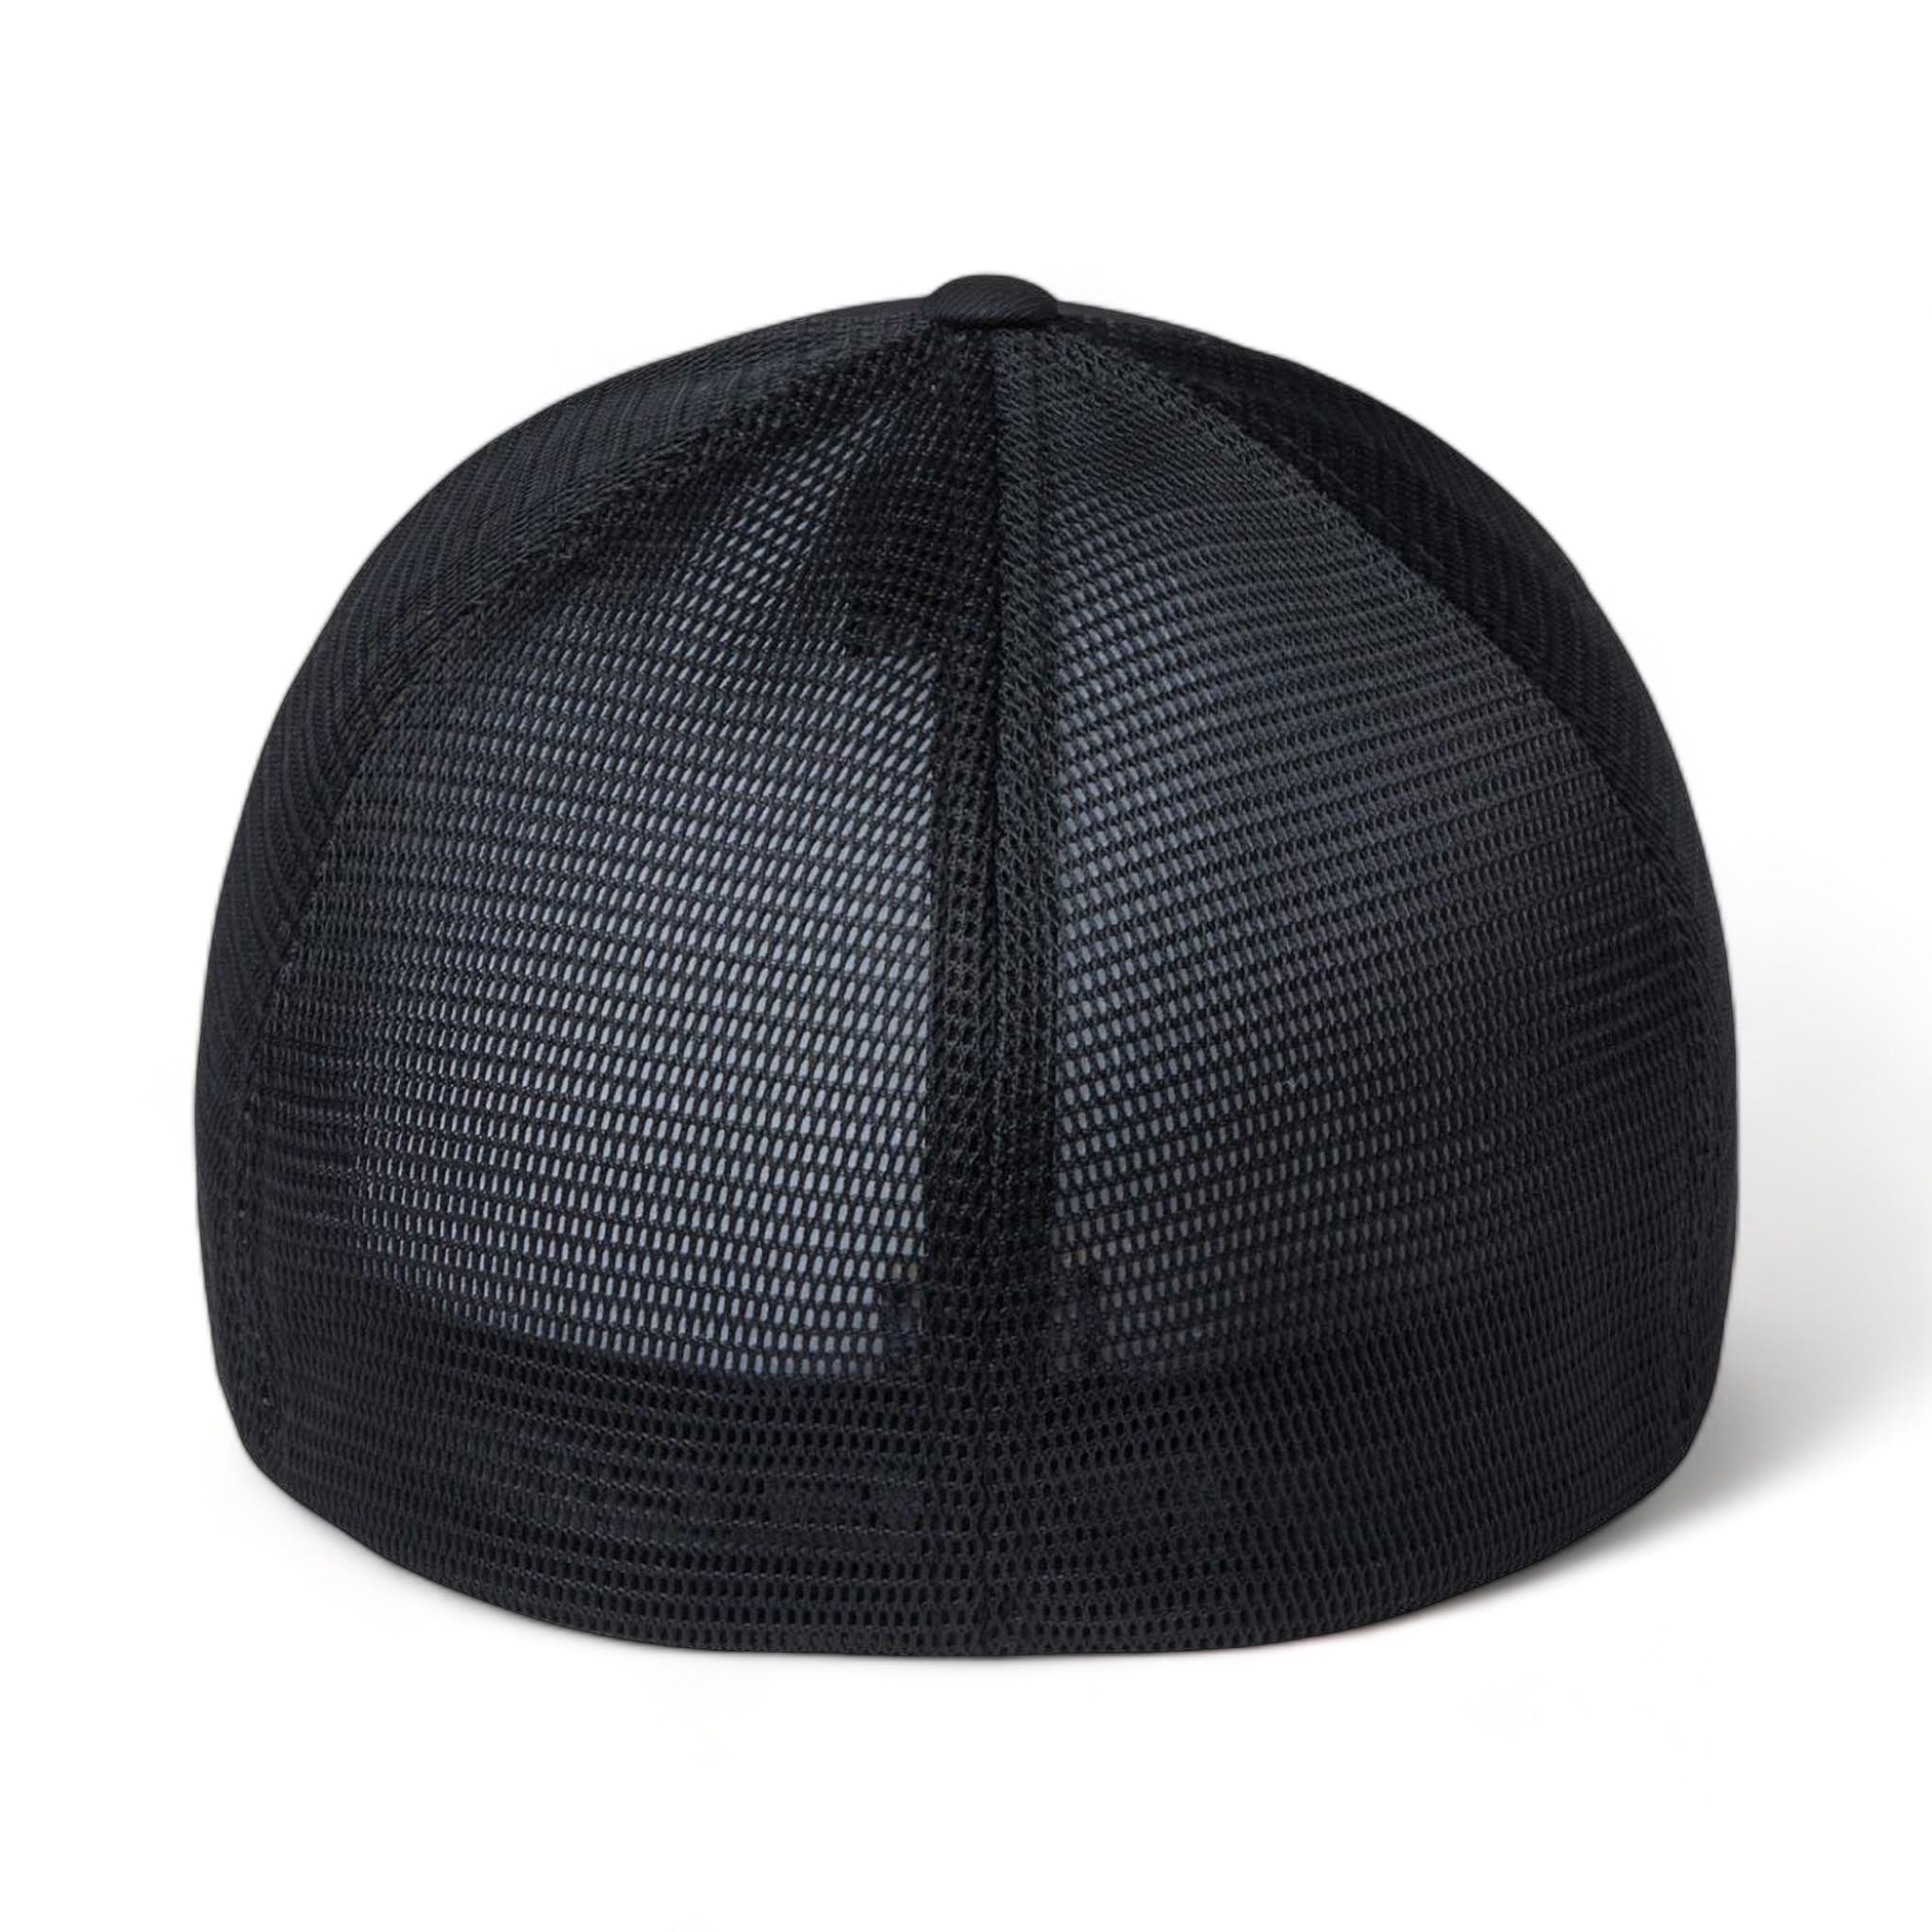 Back view of Flexfit 5511UP custom hat in black